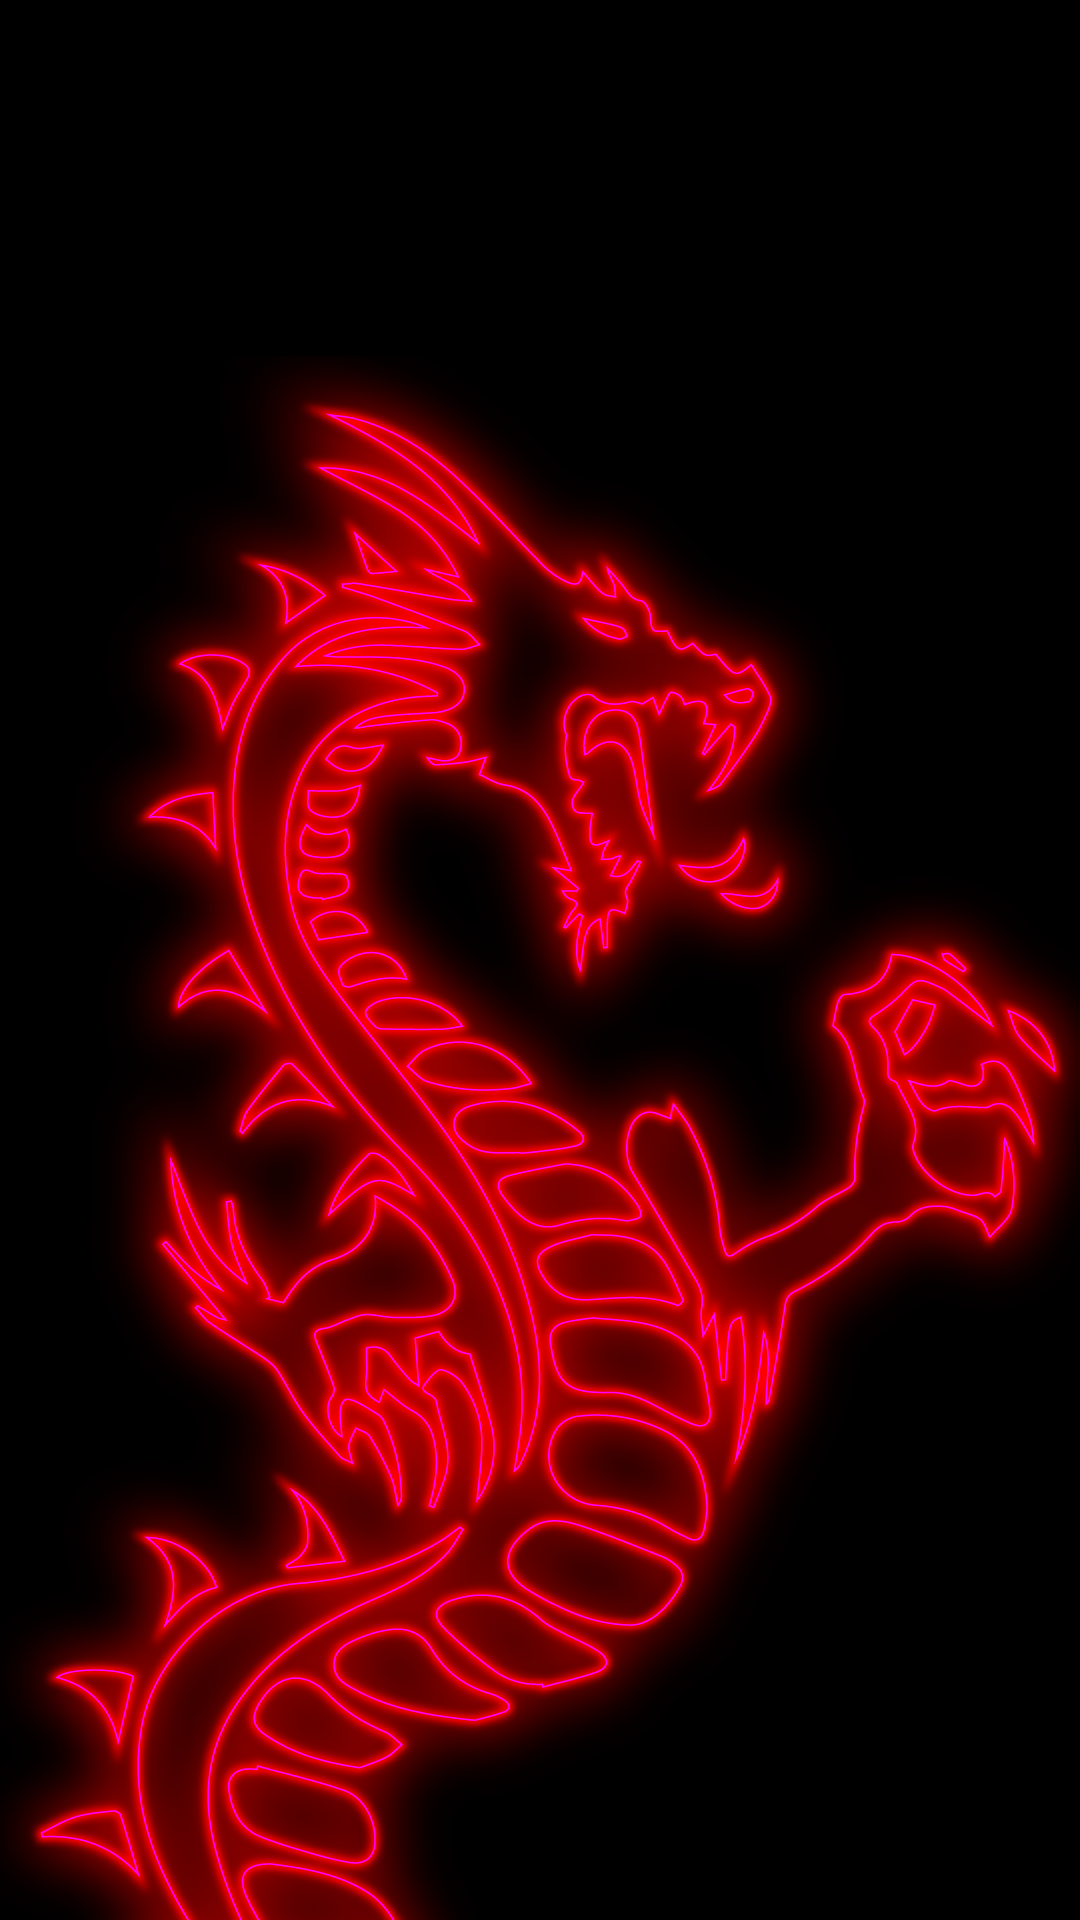 1080p wallpaper phone neon Dragon